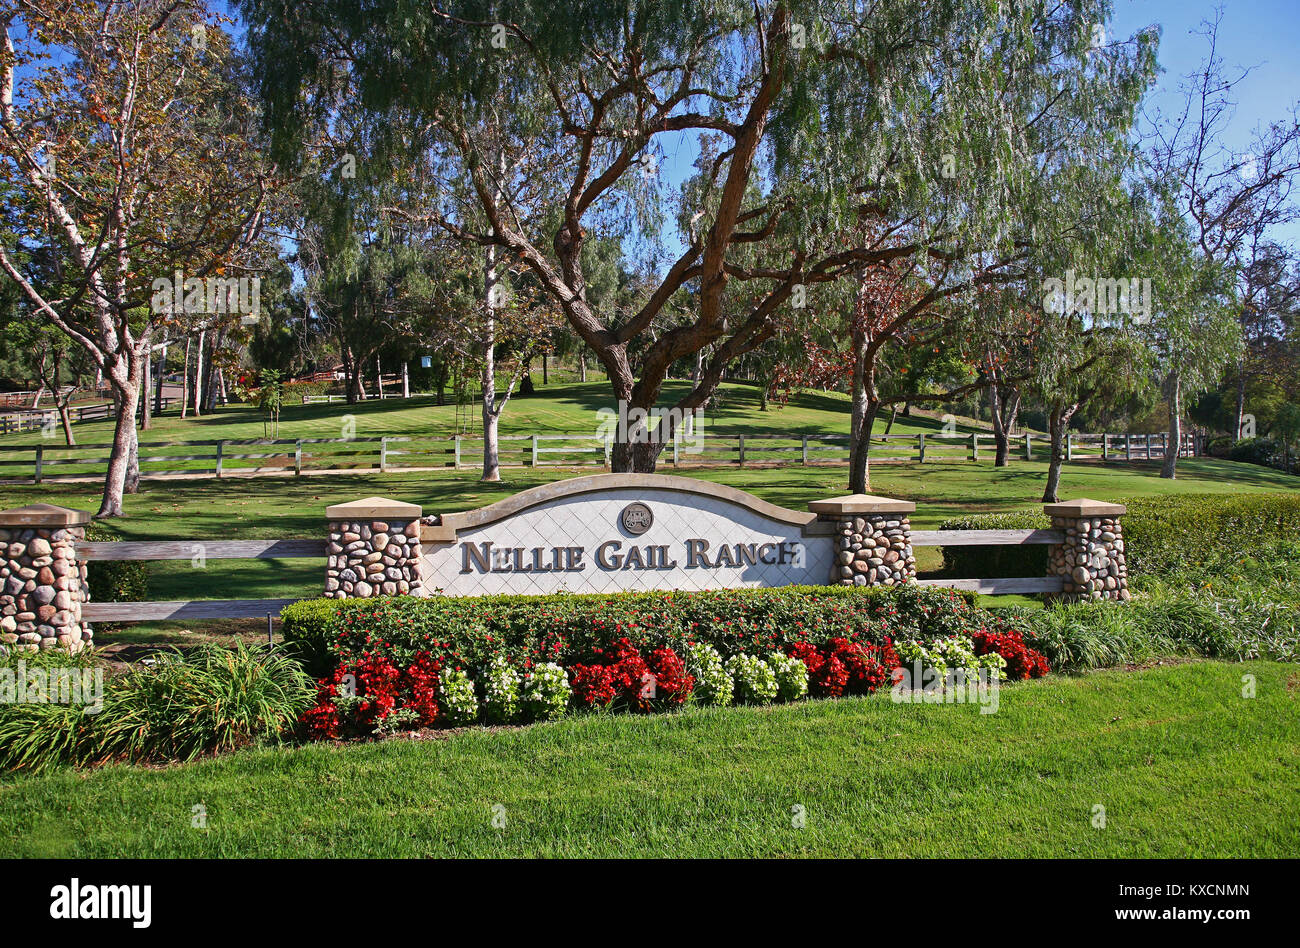 Nellie Gail Ranch monument sign, Laguna Hills, California Stock Photo